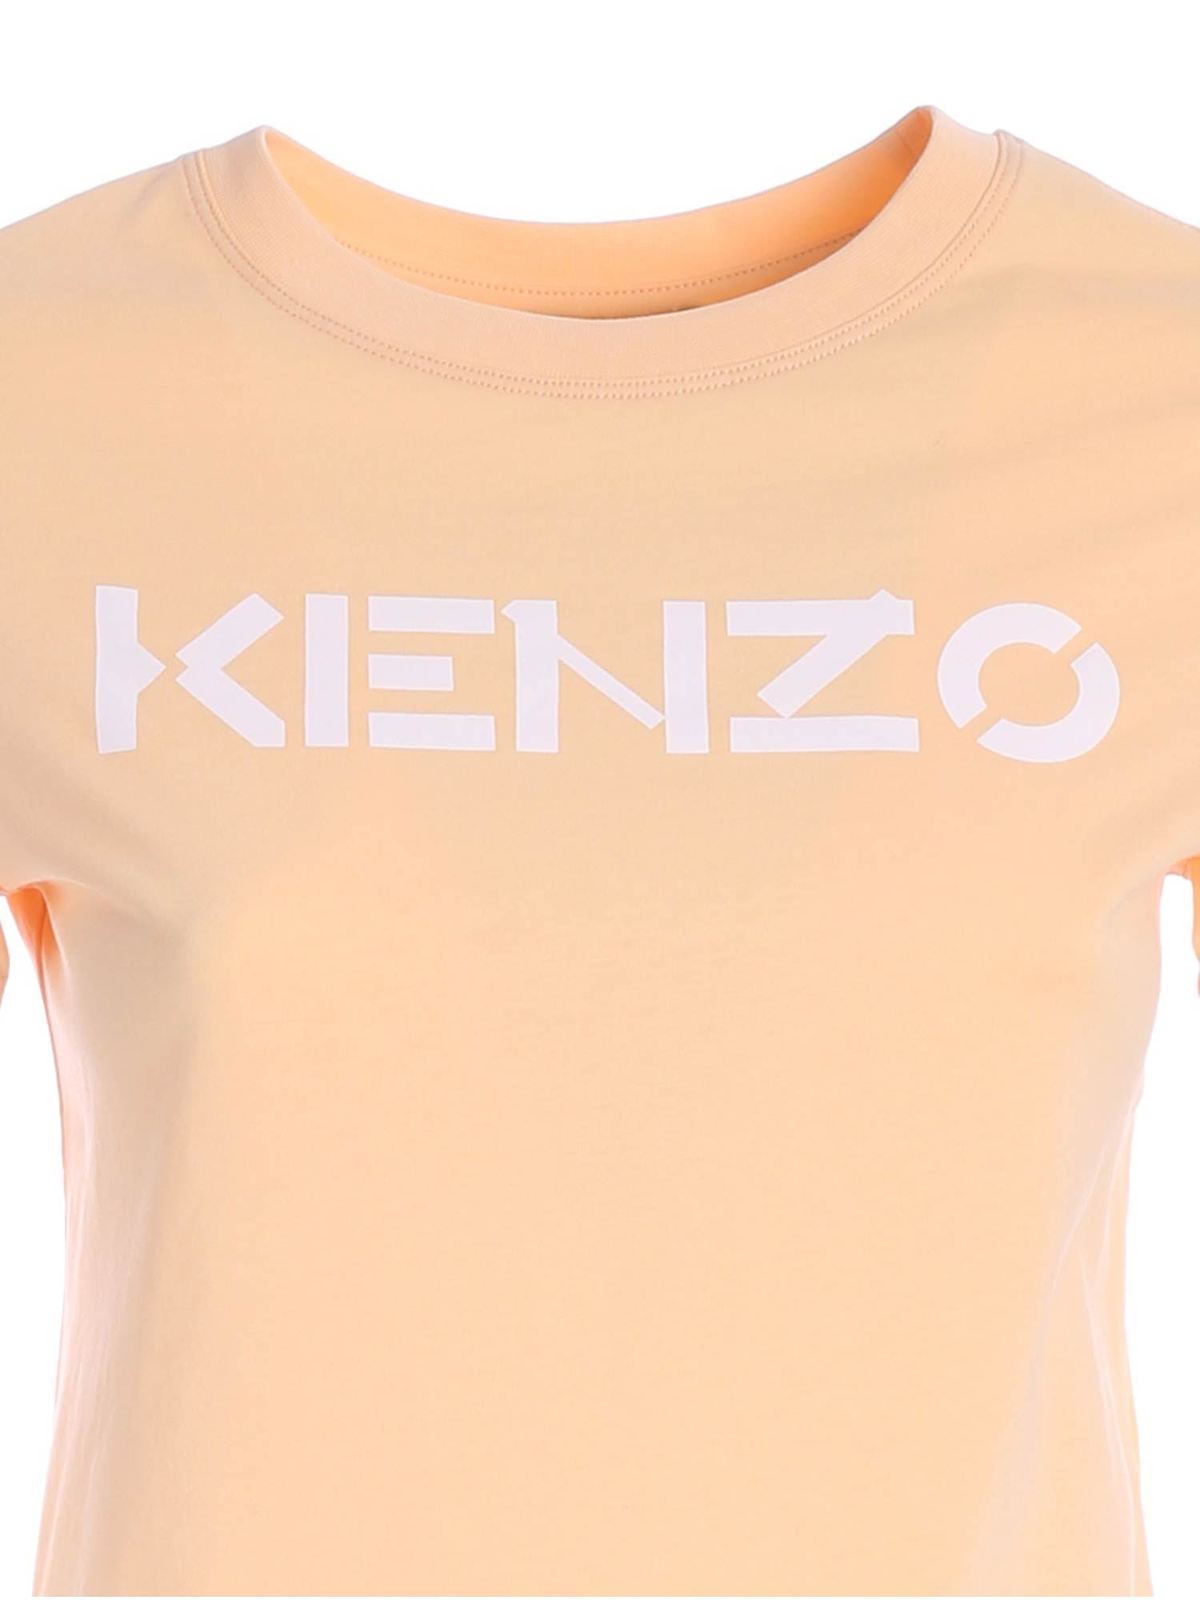 Classic Kenzo logo T-shirt in orange